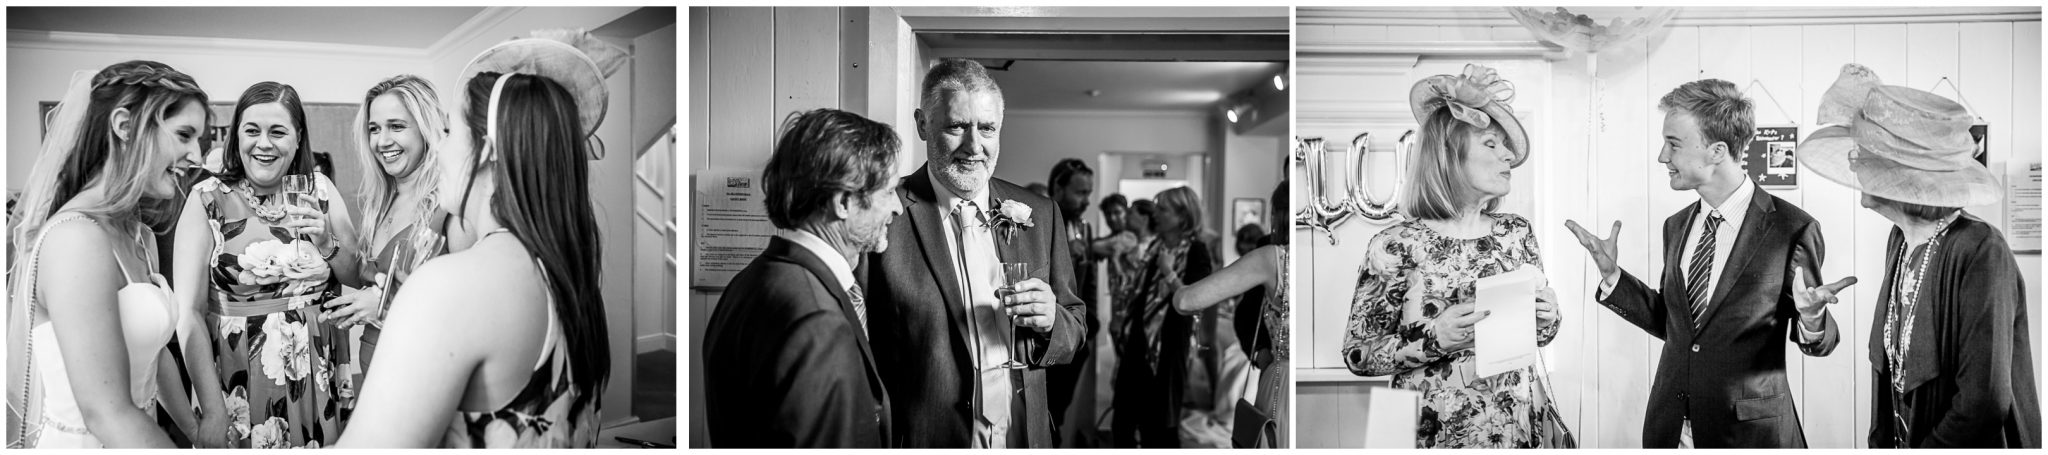 Informal photos of wedding guests at reception